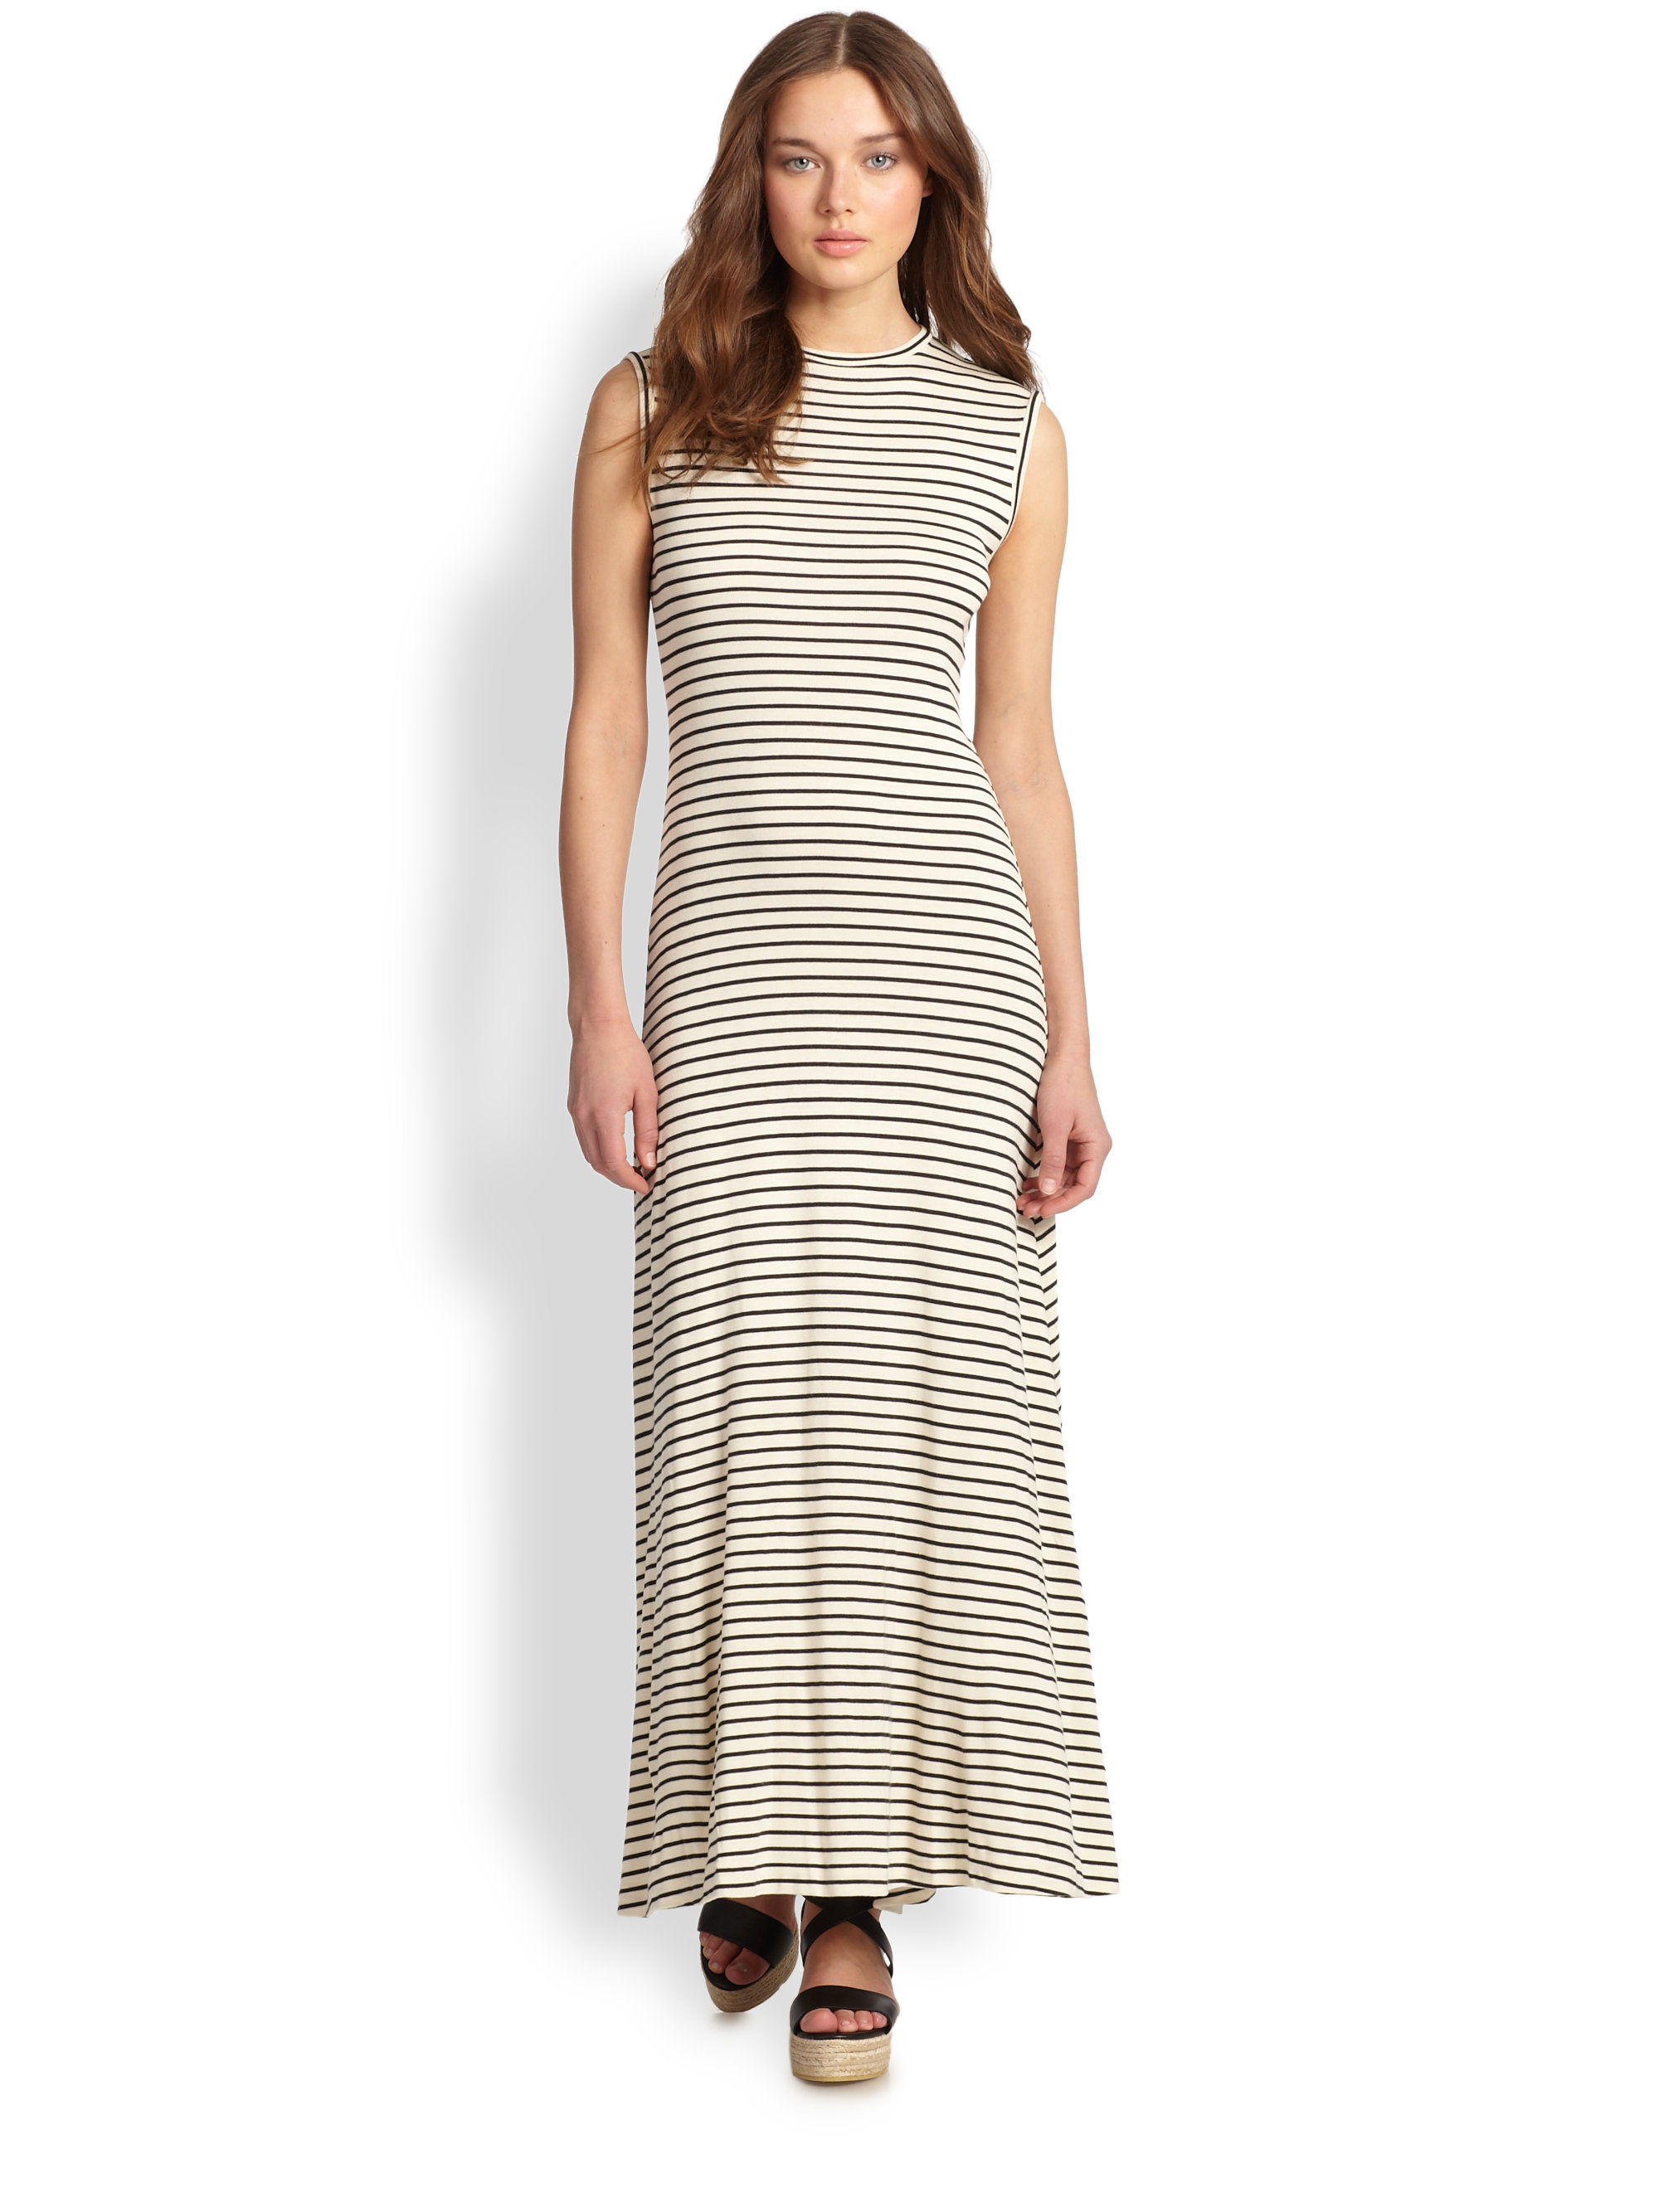 Lyst Polo Ralph Lauren Striped Maxi Dress in Natural